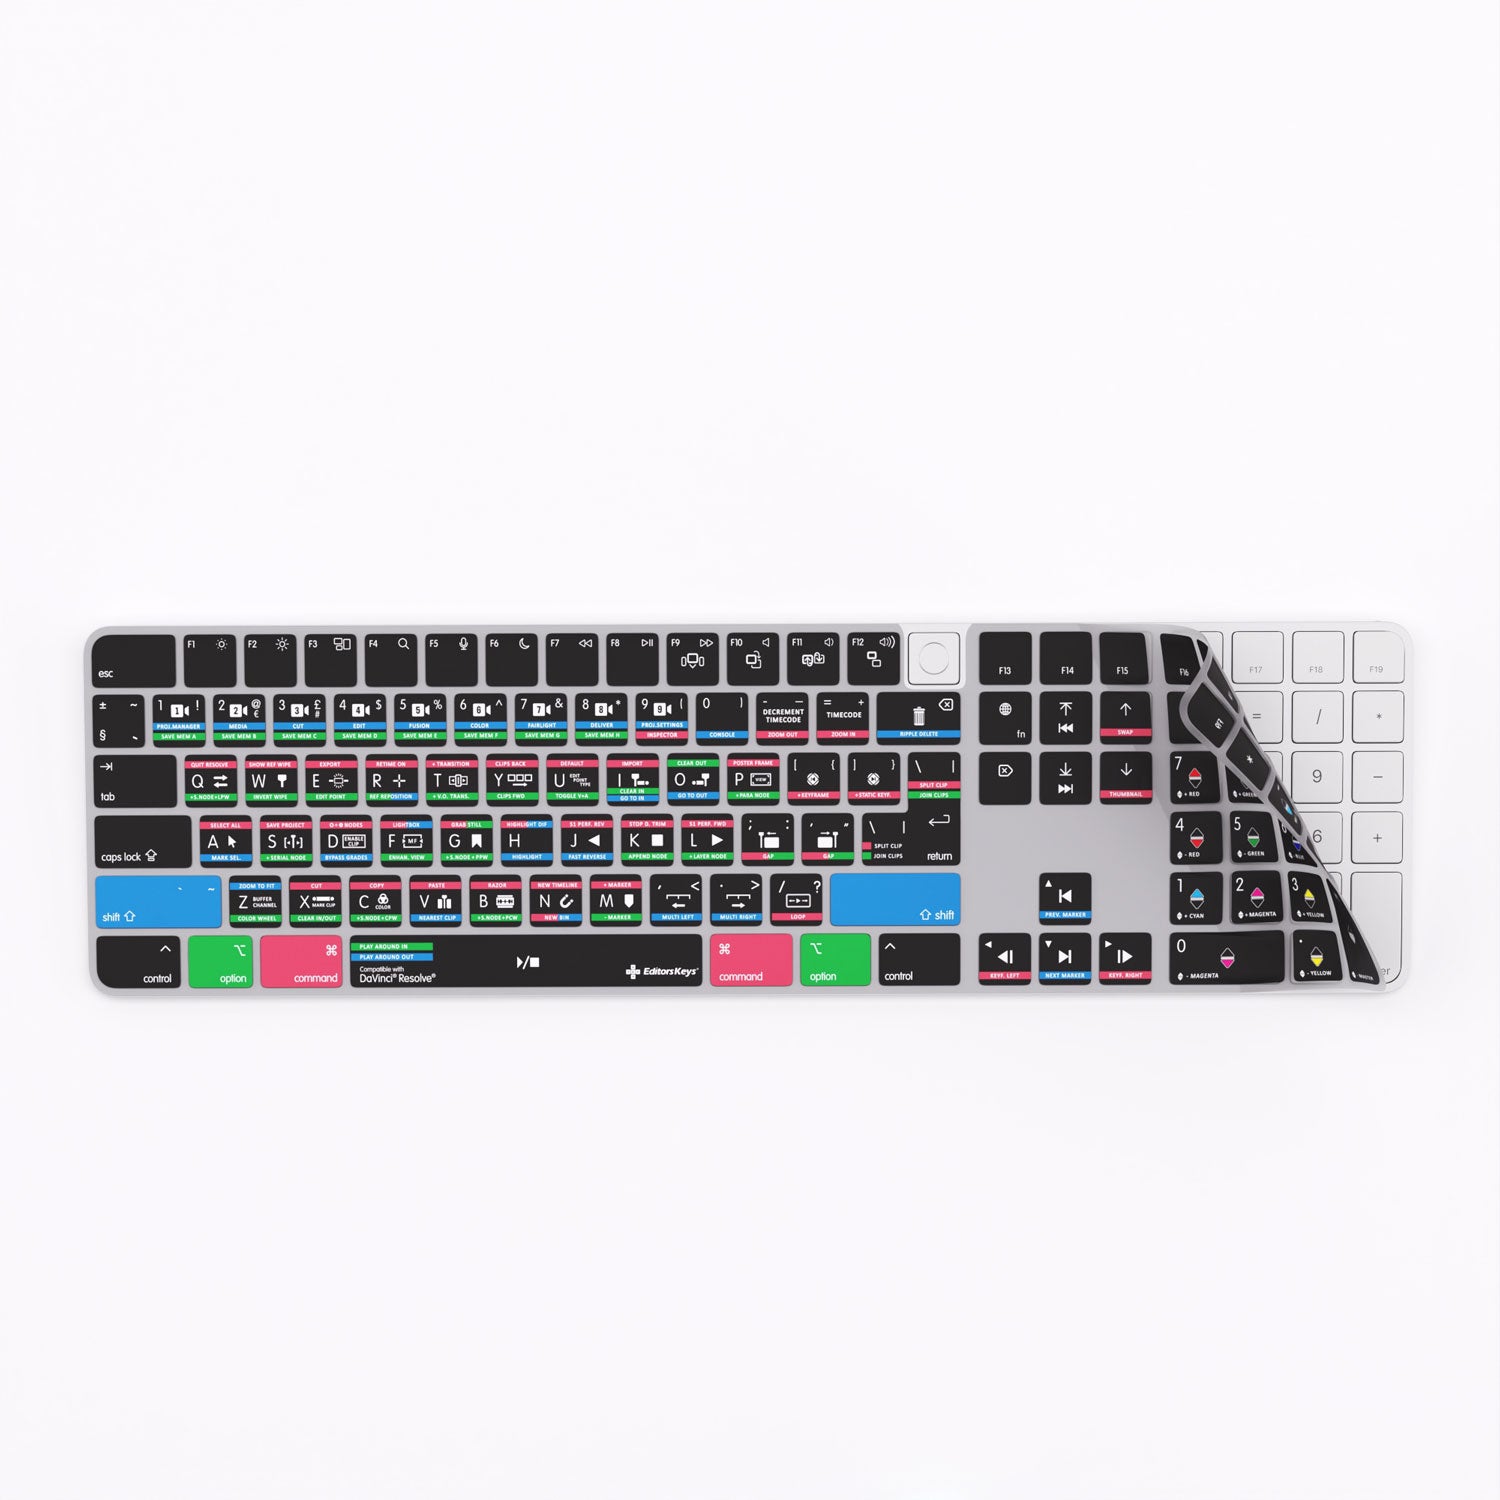 DaVinci Resolve Keyboard Covers for MacBook and iMac